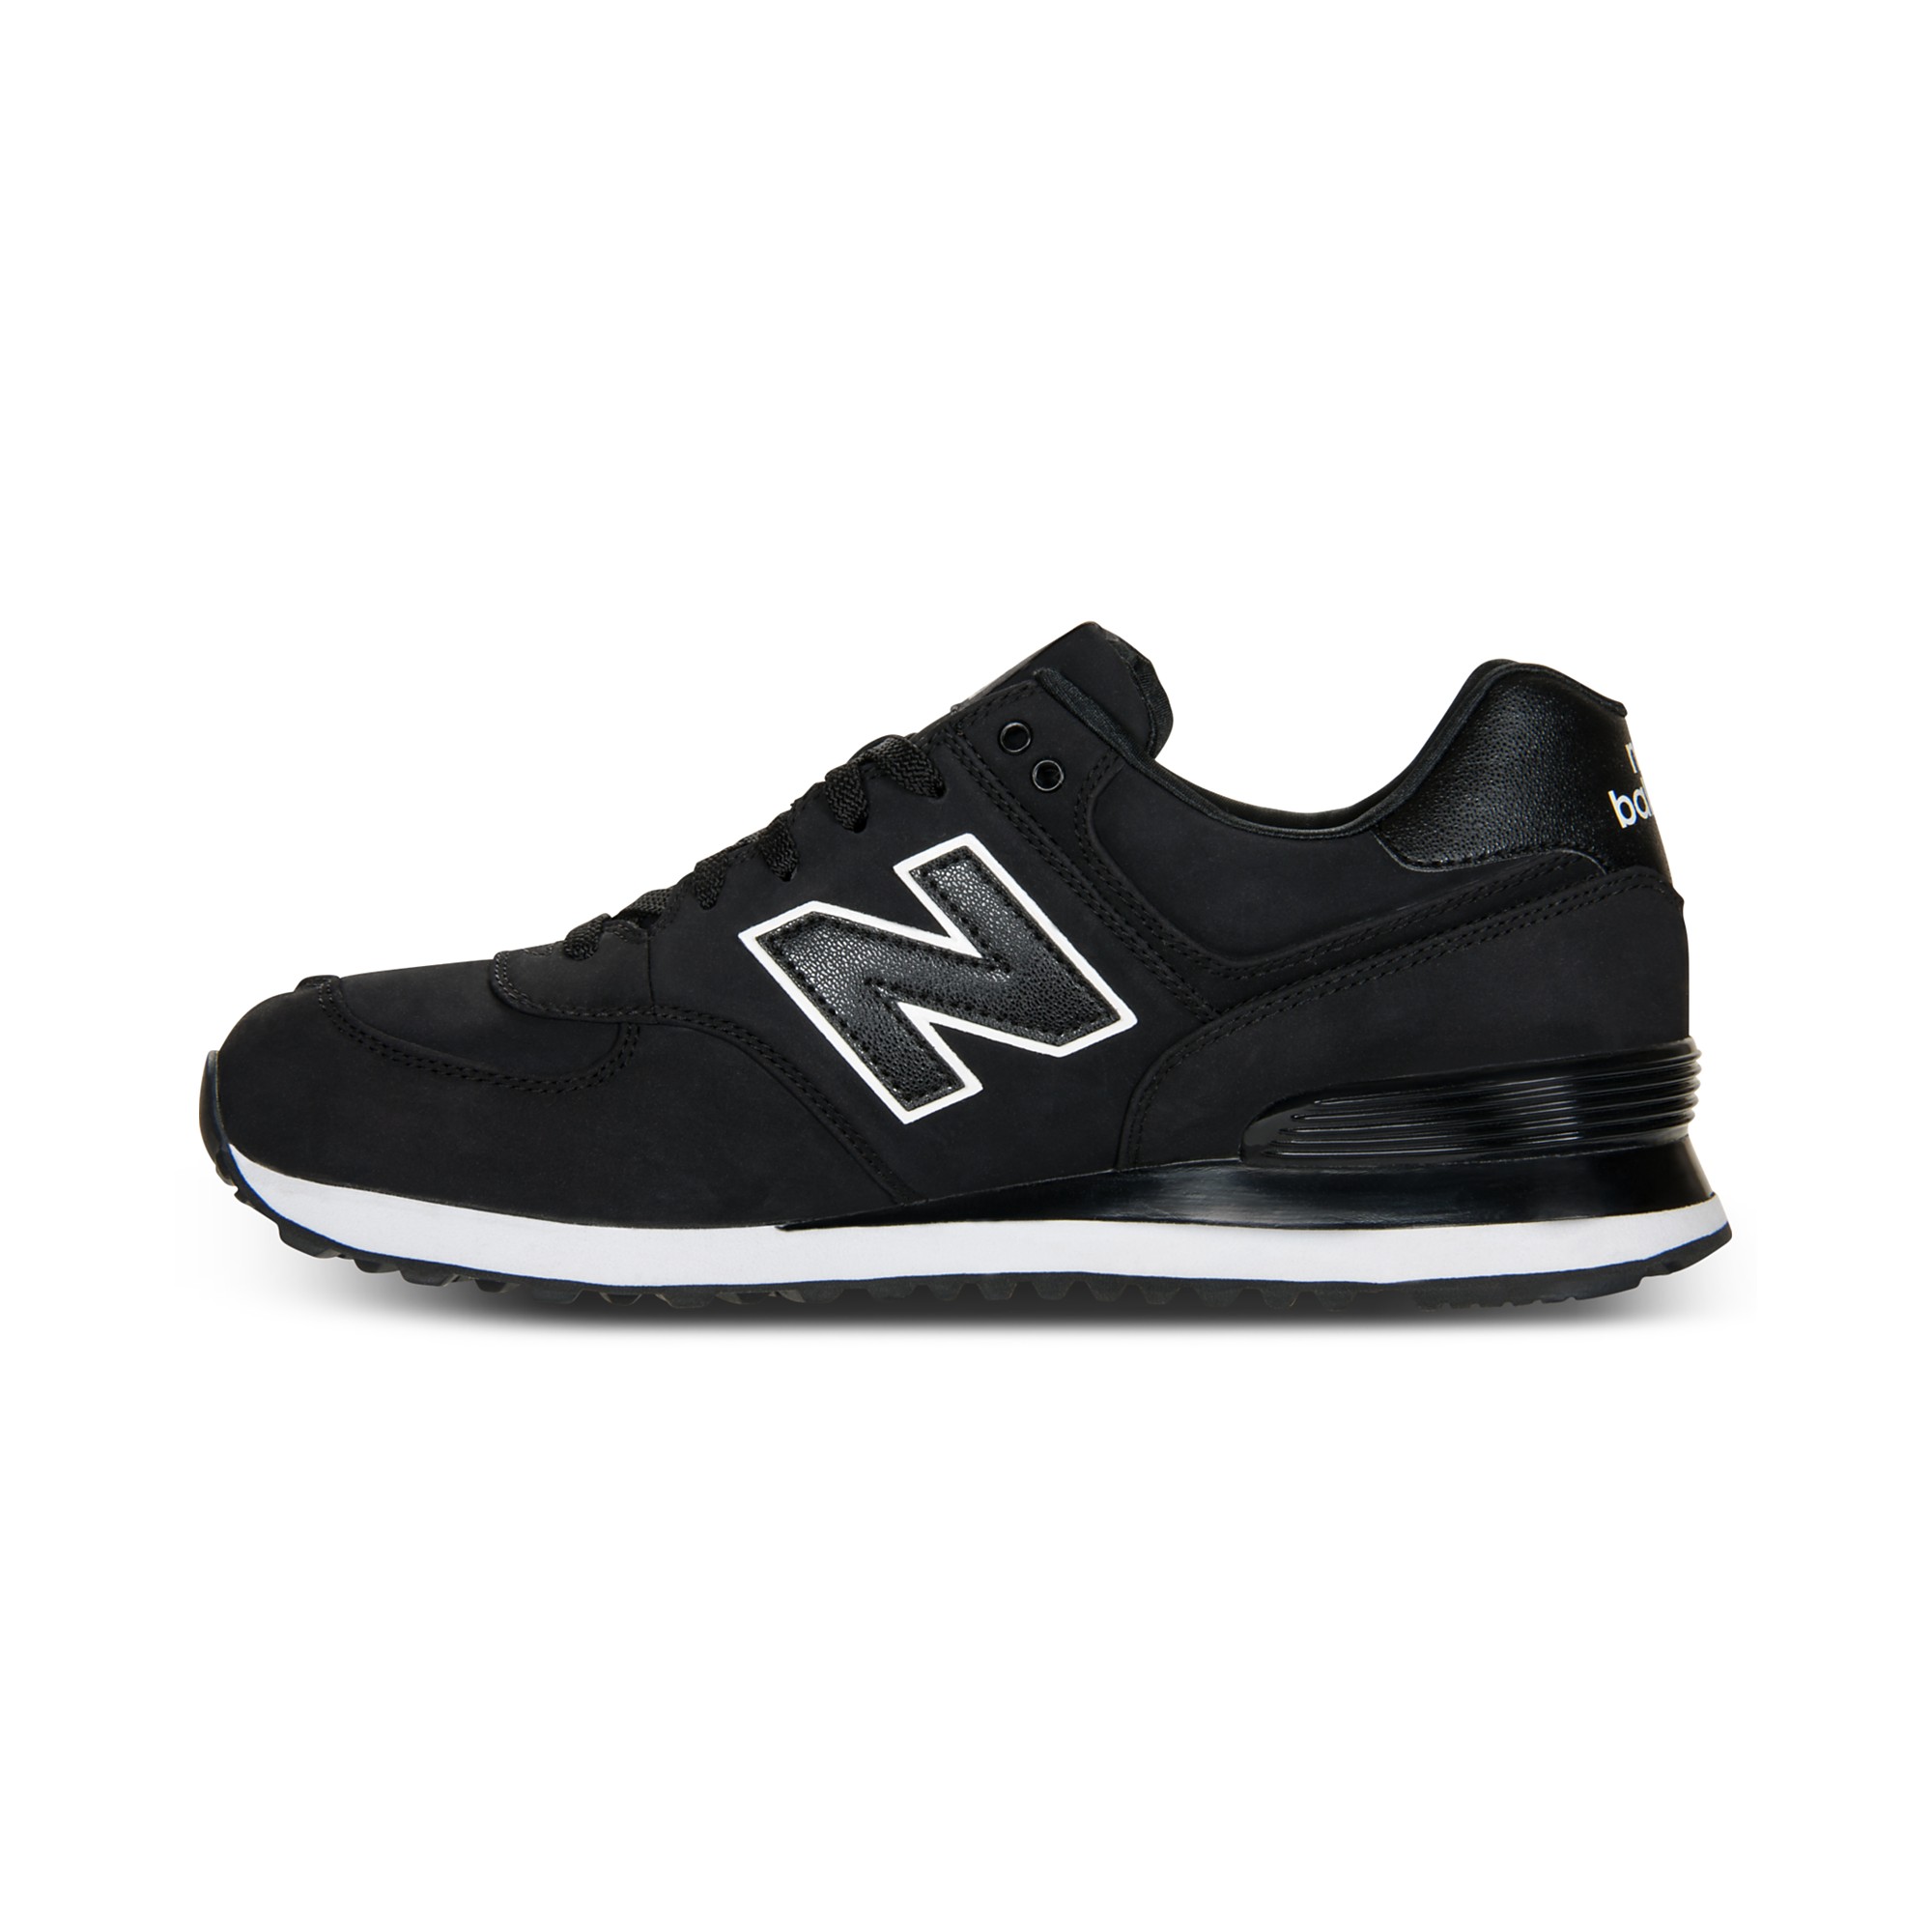 New Balance 574 Sneakers in Black/White (Black) for Men - Lyst